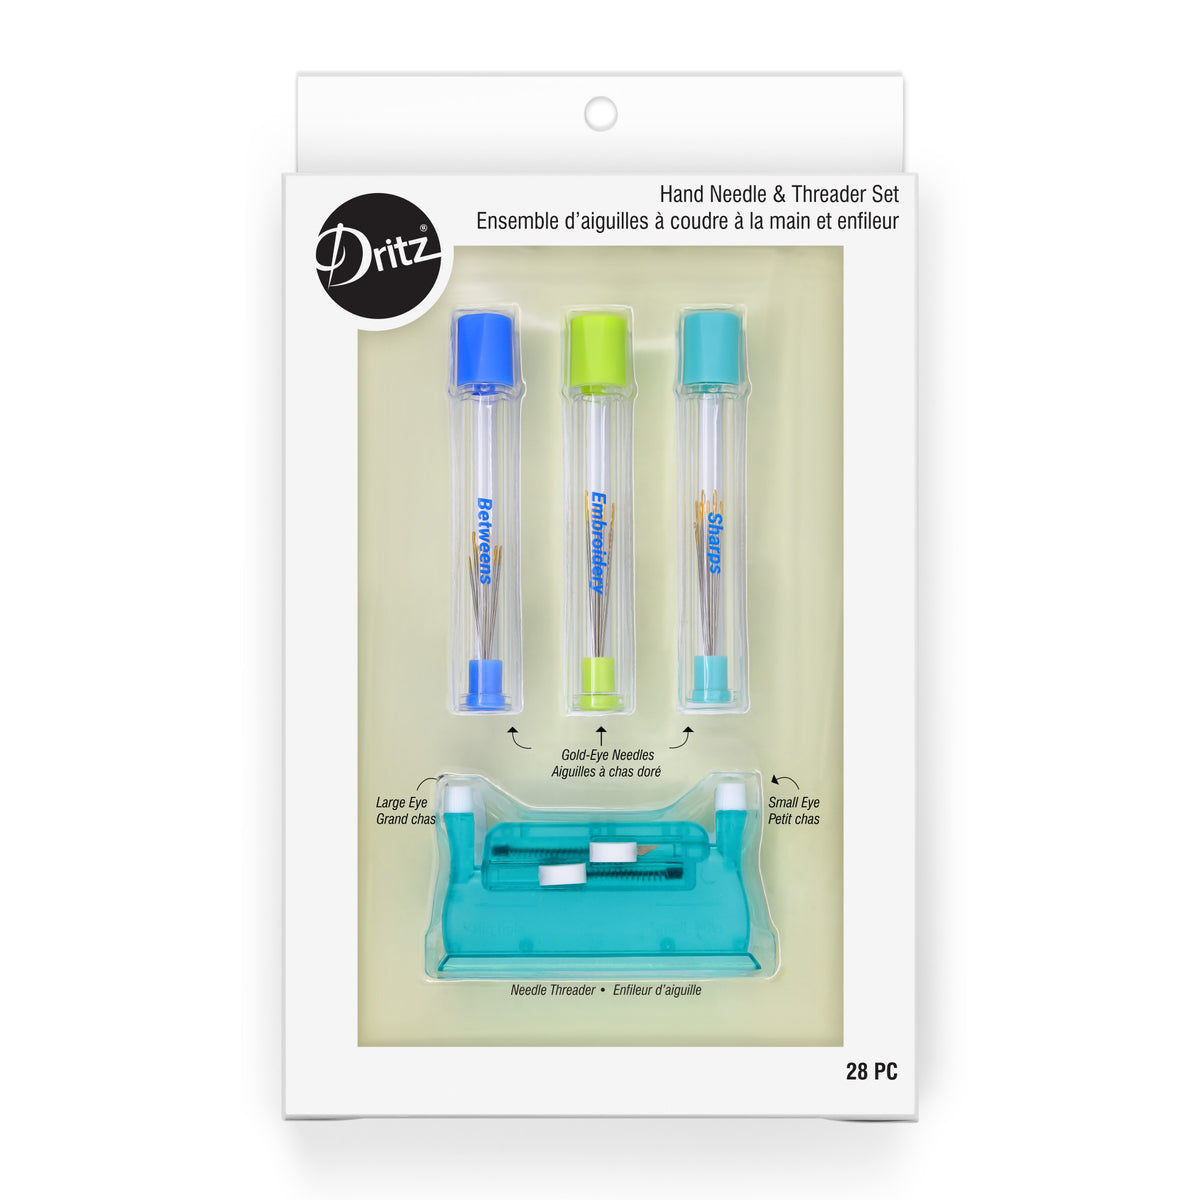 Dritz Plastic Sewing Needles, set of 2 needles